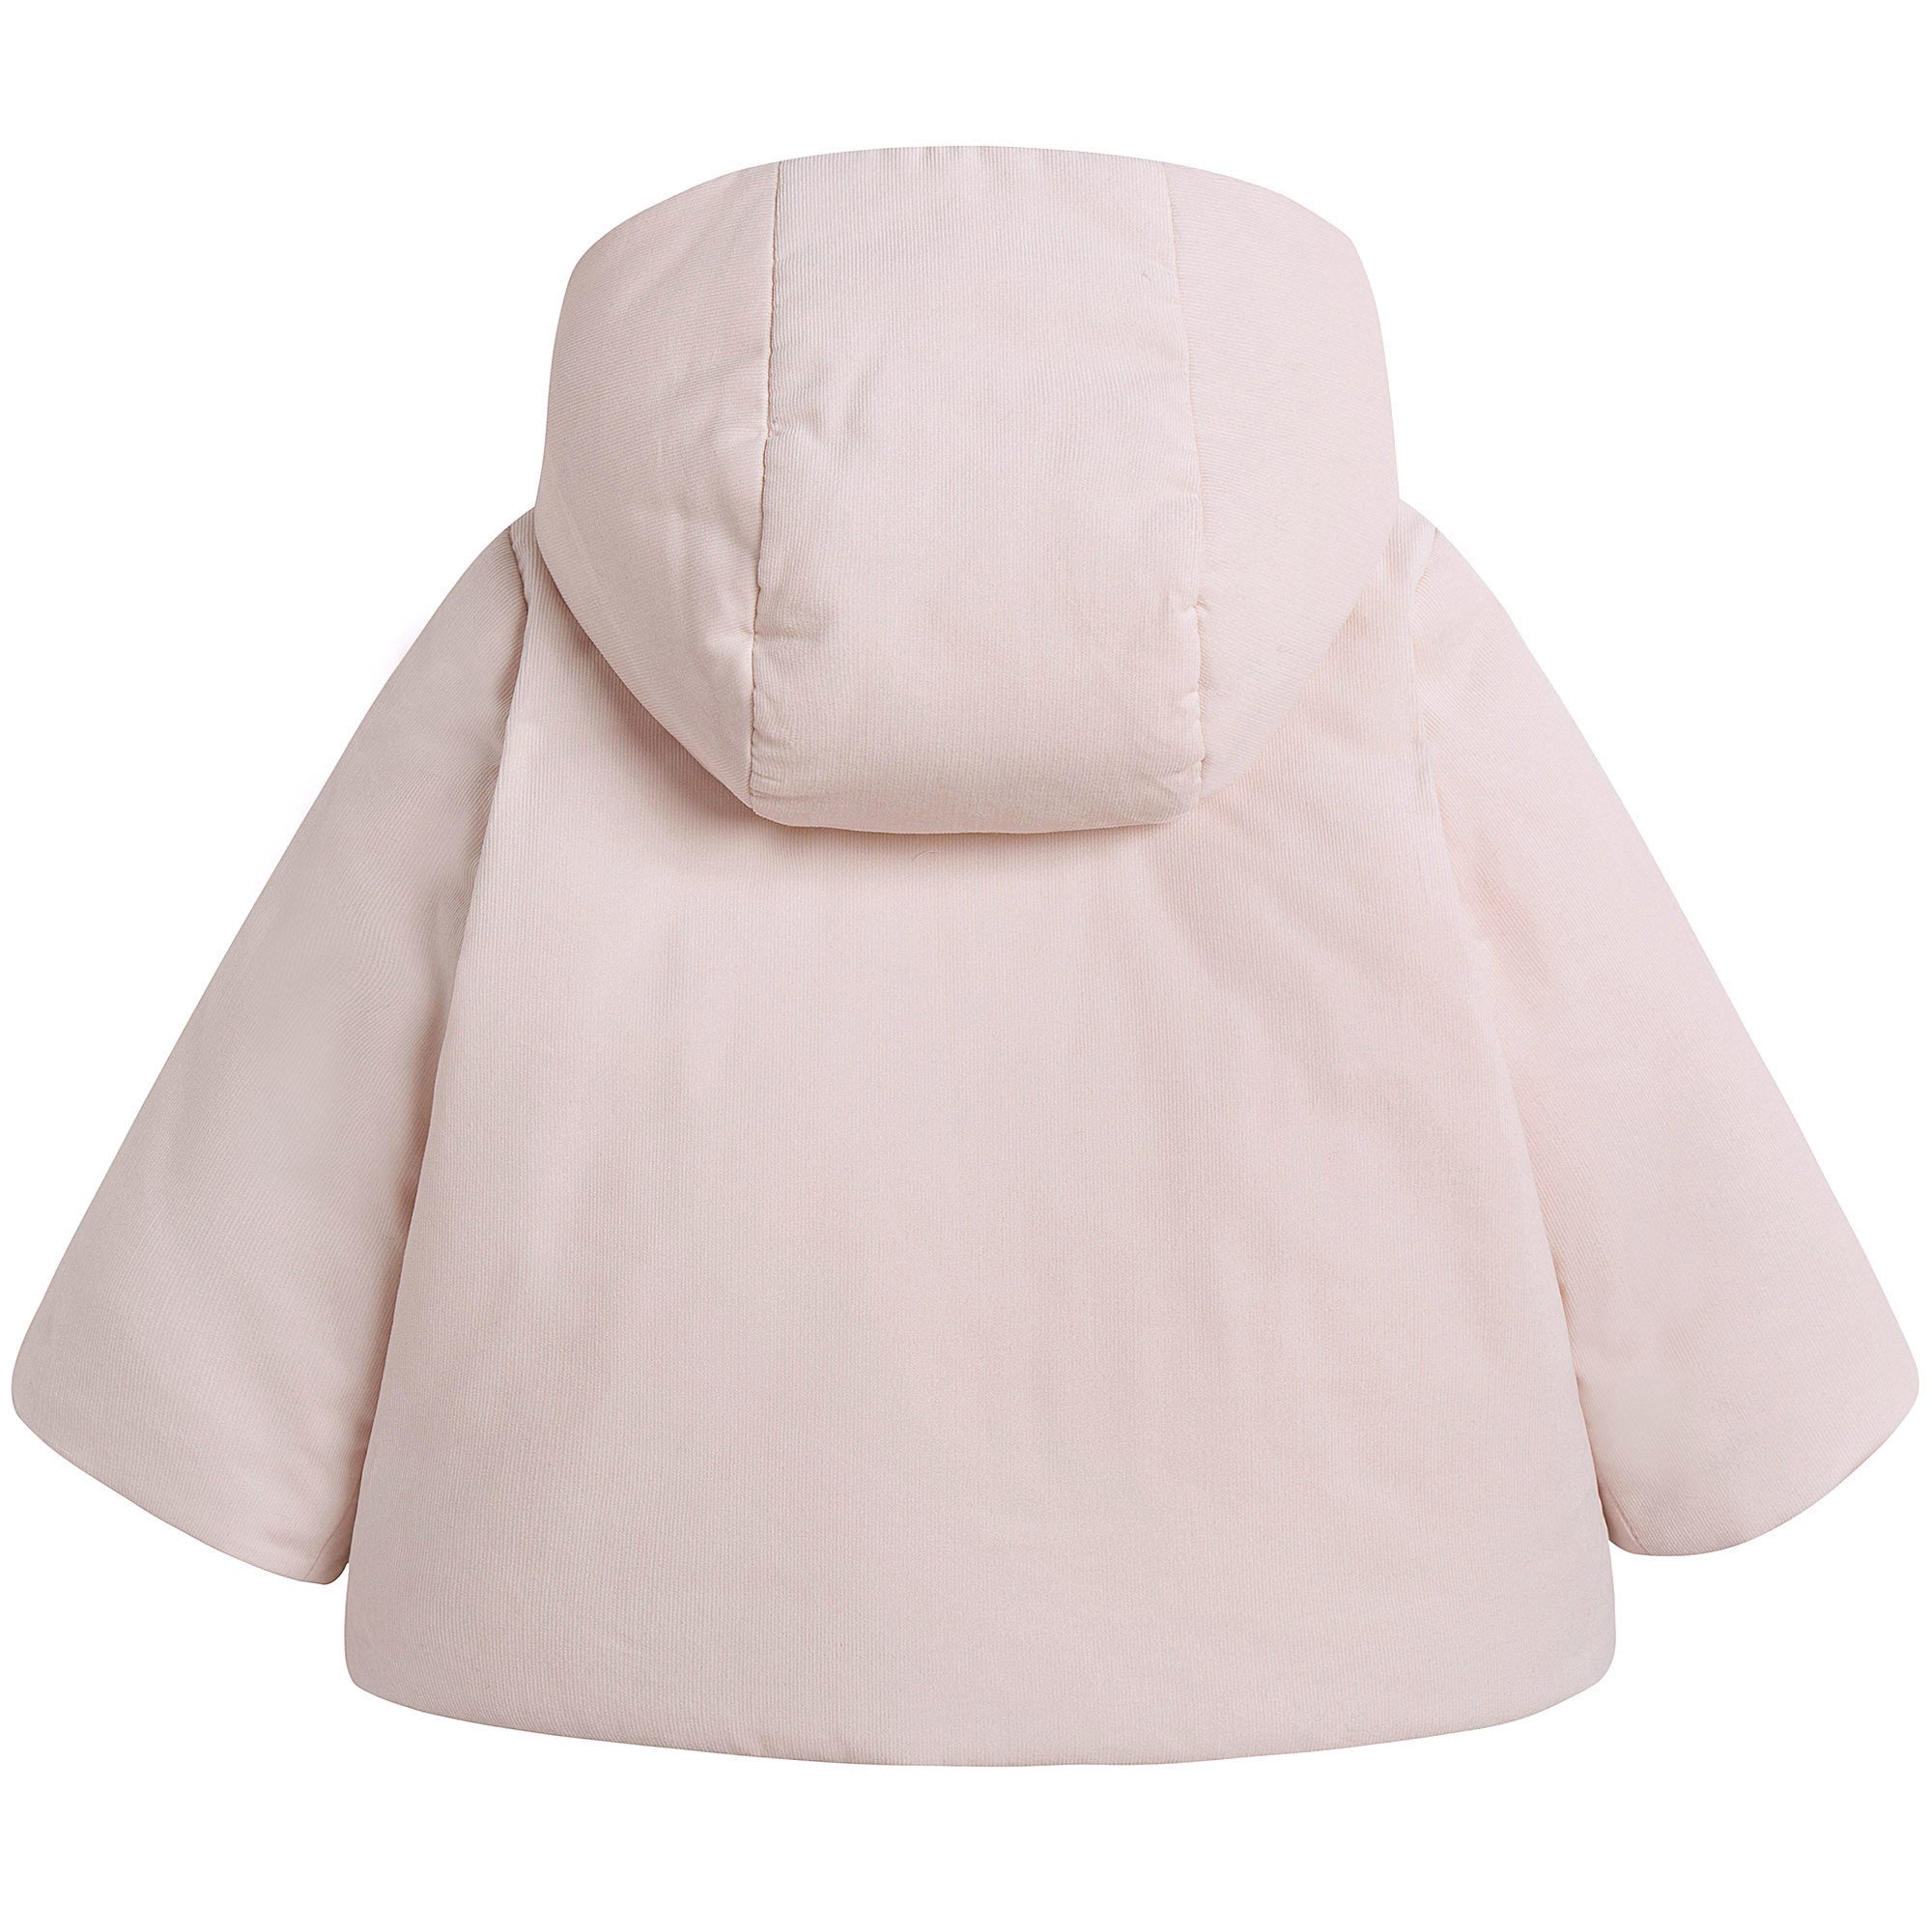 Baby Girls Light Pink Hooded Cotton Coat - CÉMAROSE | Children's Fashion Store - 2